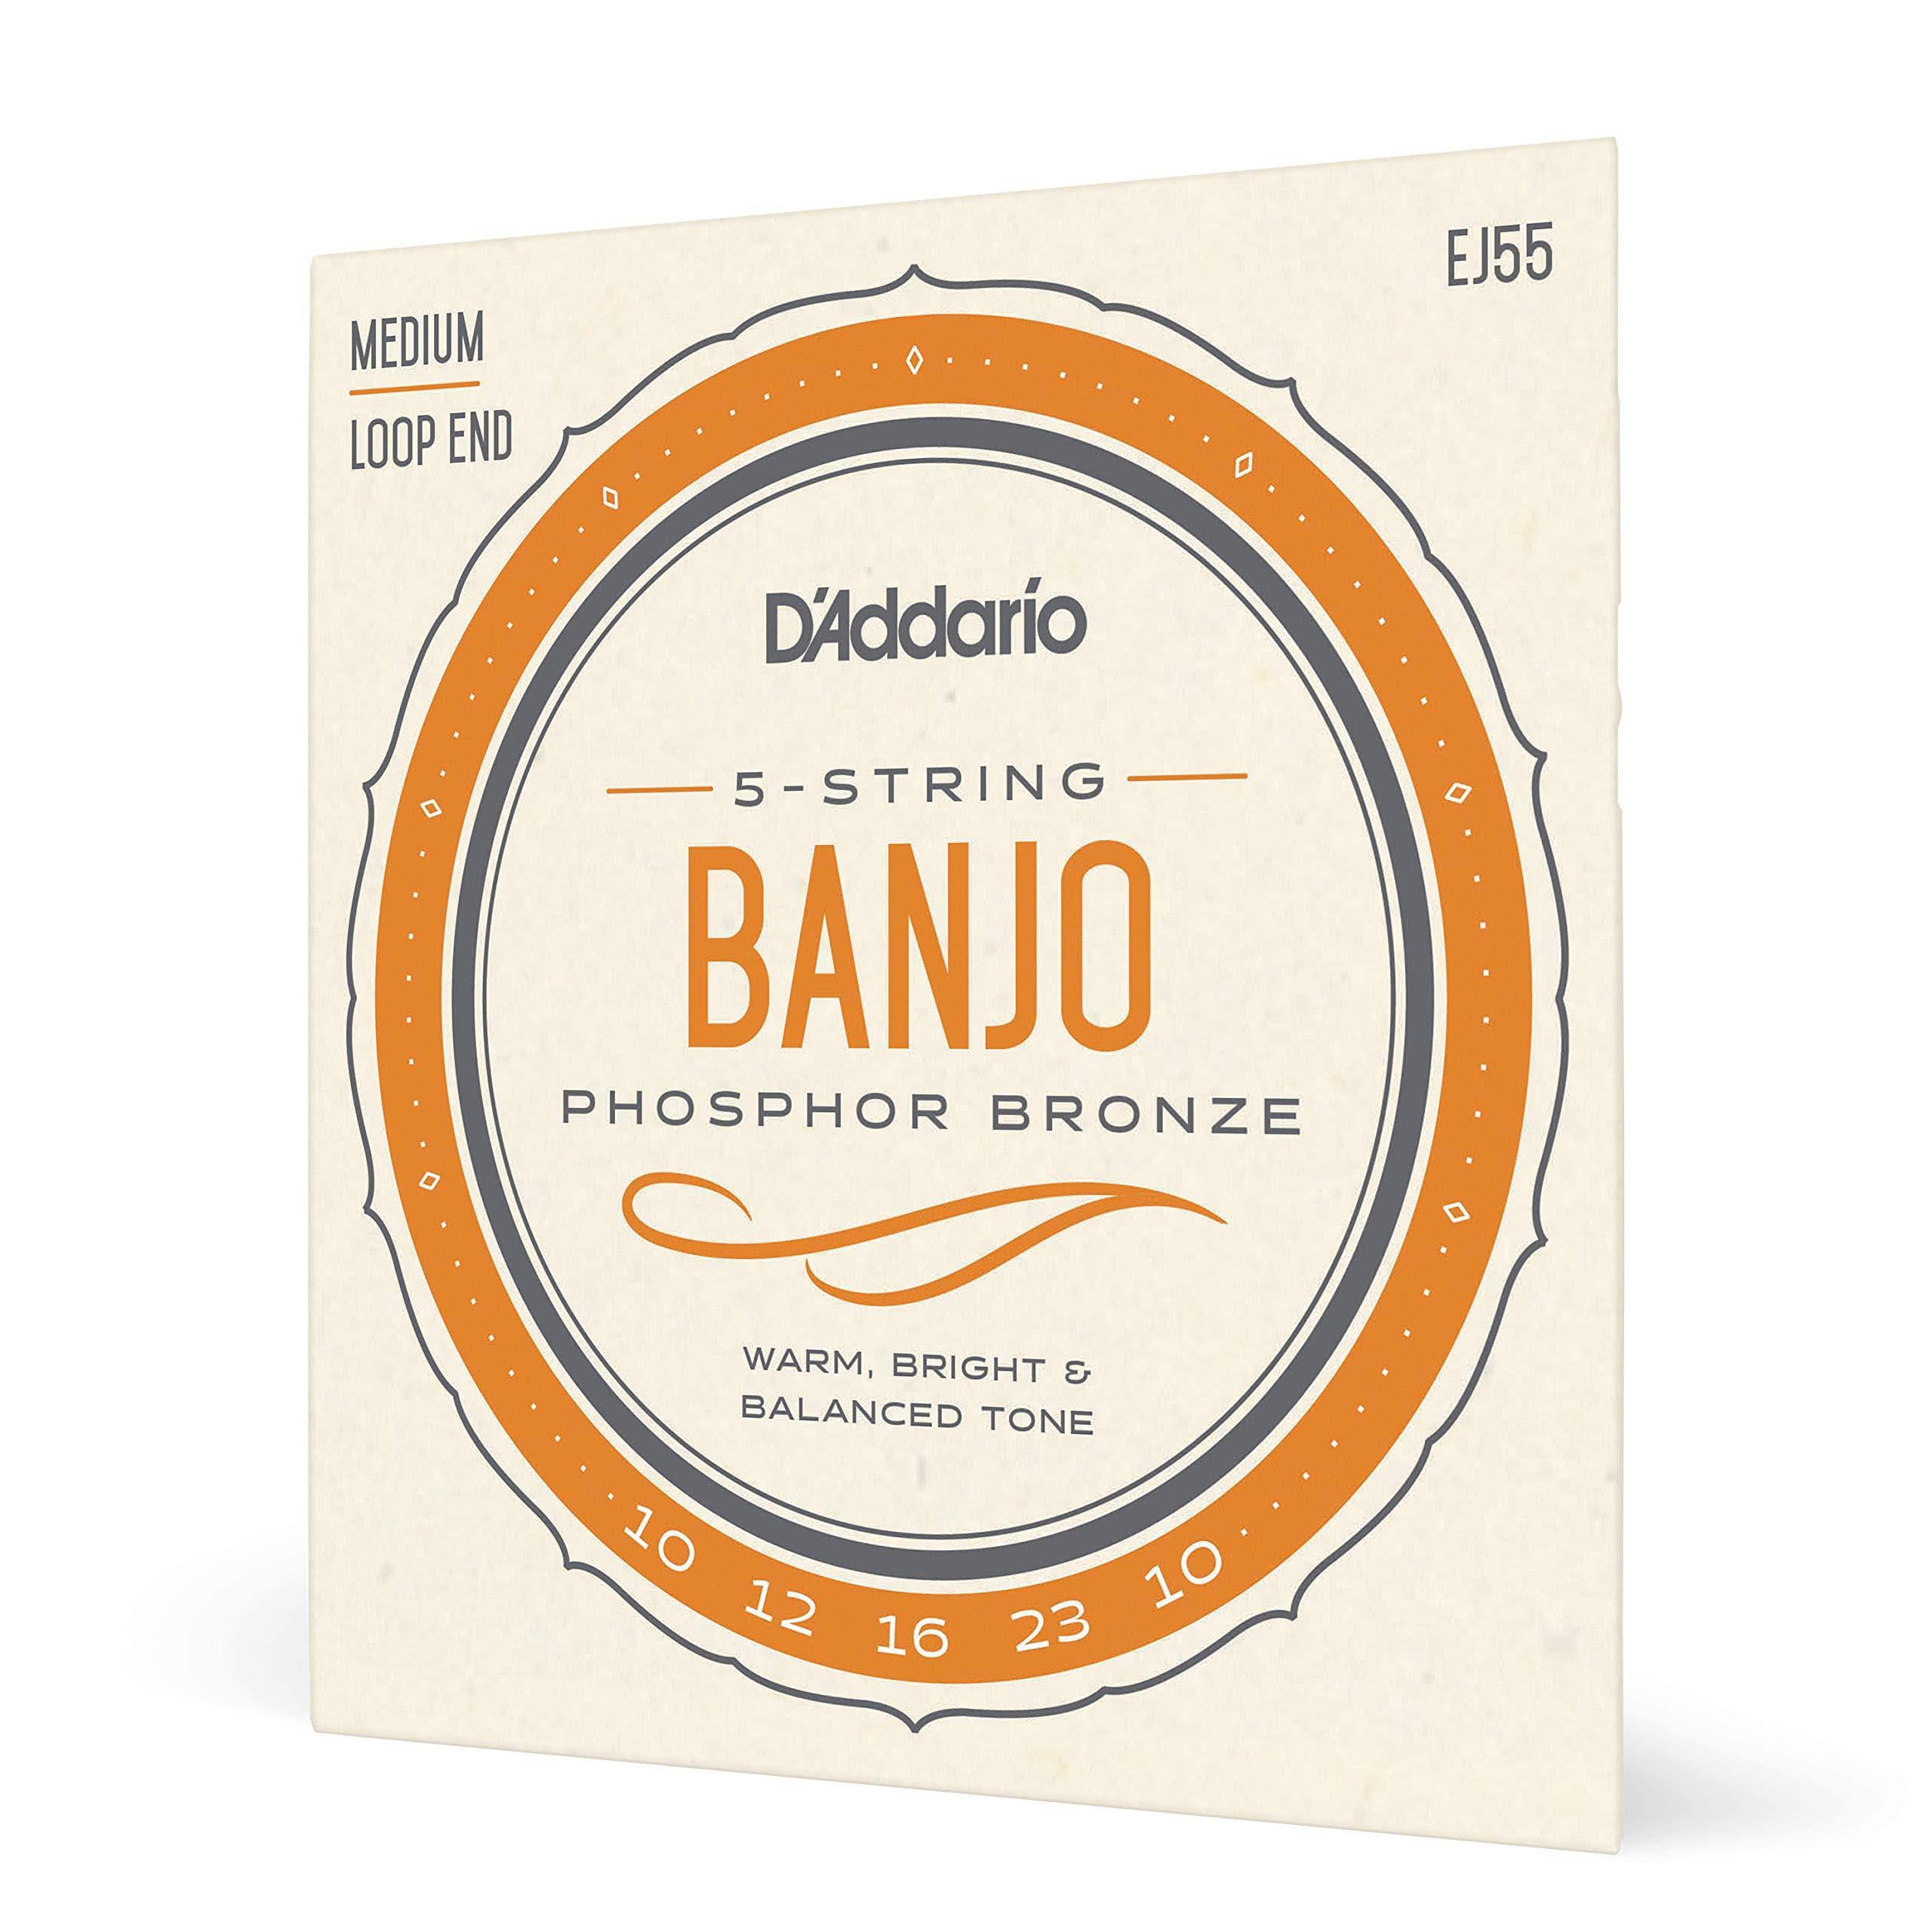 D'Addario EJ55 Banjo Strings - Medium, 10-23, Phosphor Bronze, 5 String